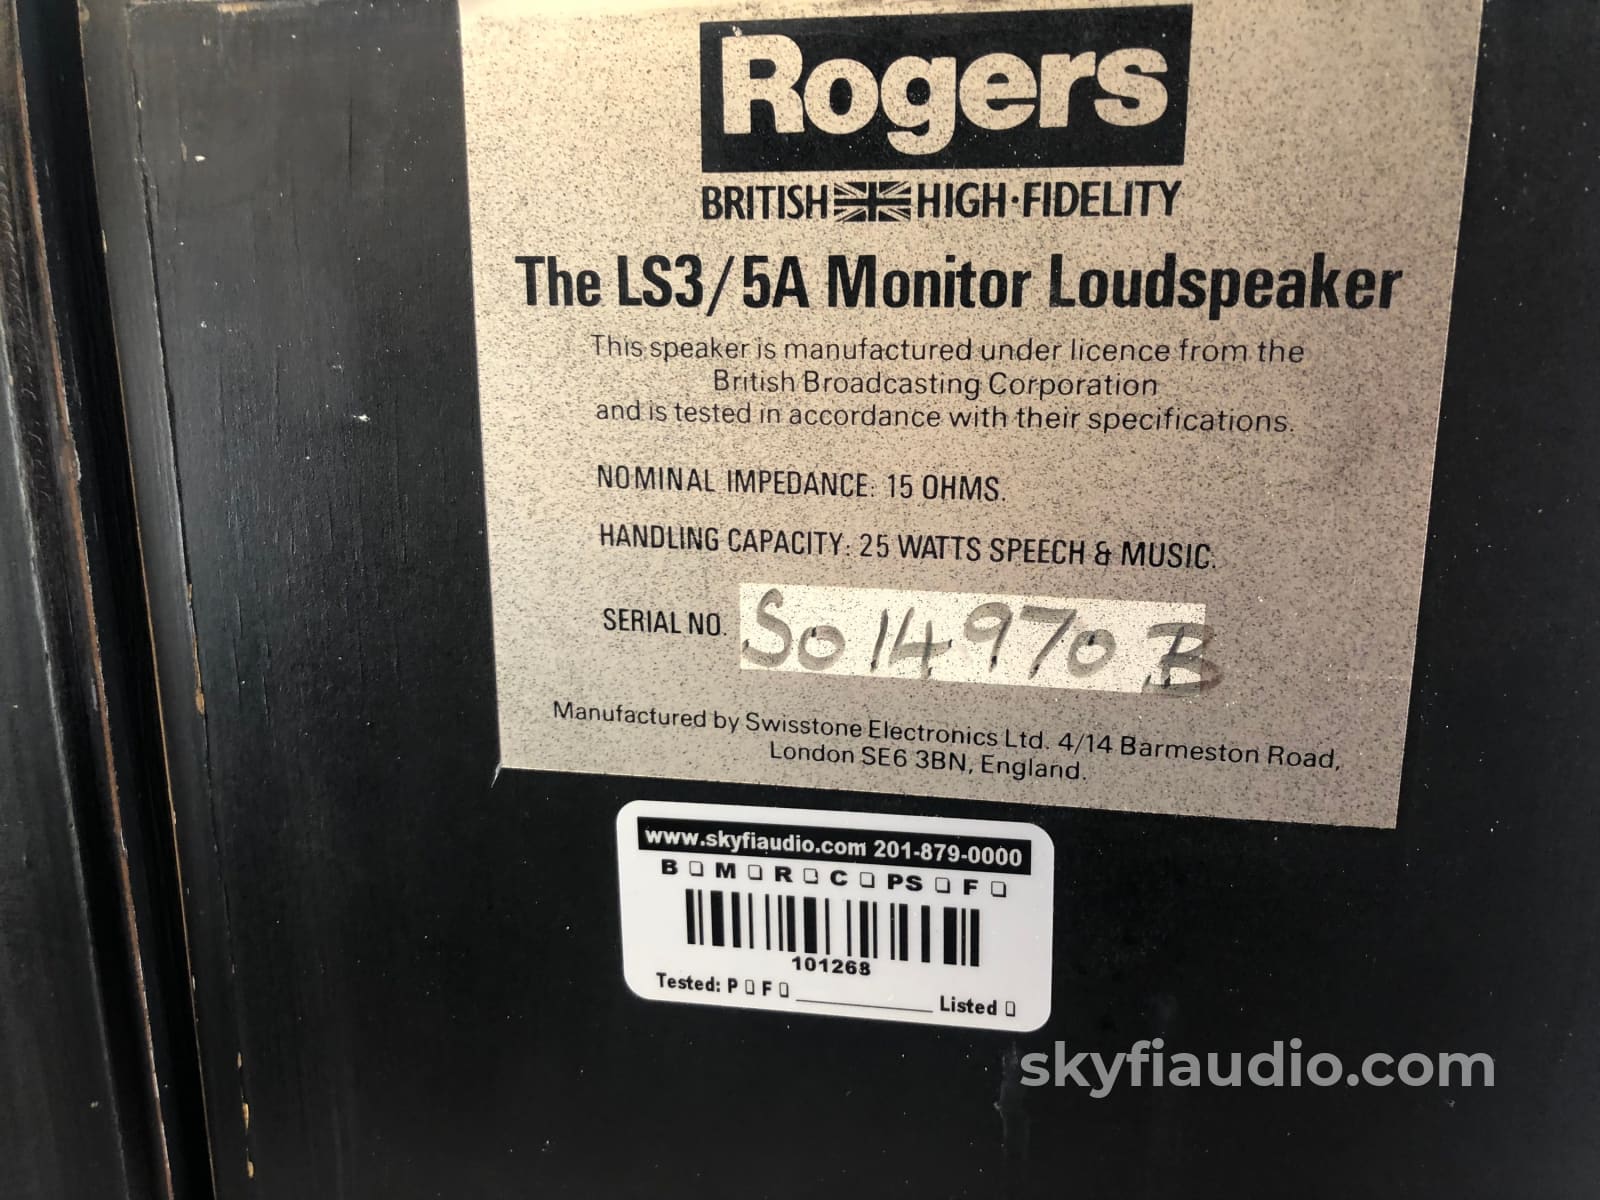 Rogers Ls3/5A Bbc Speakers - A True Audio Classic